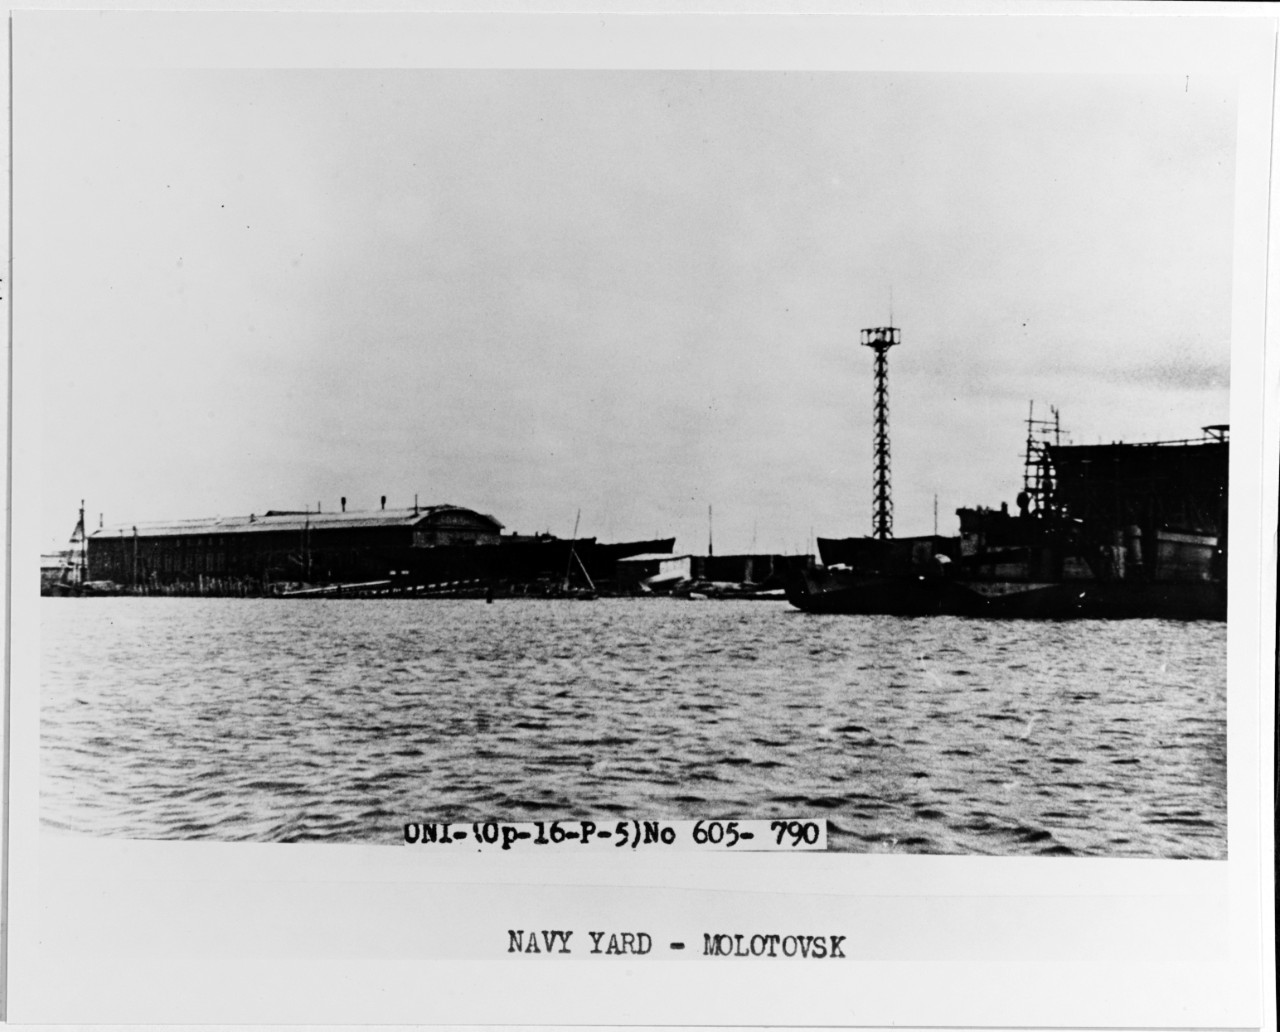 Molotovsk Navy Yard, U.S.S.R.